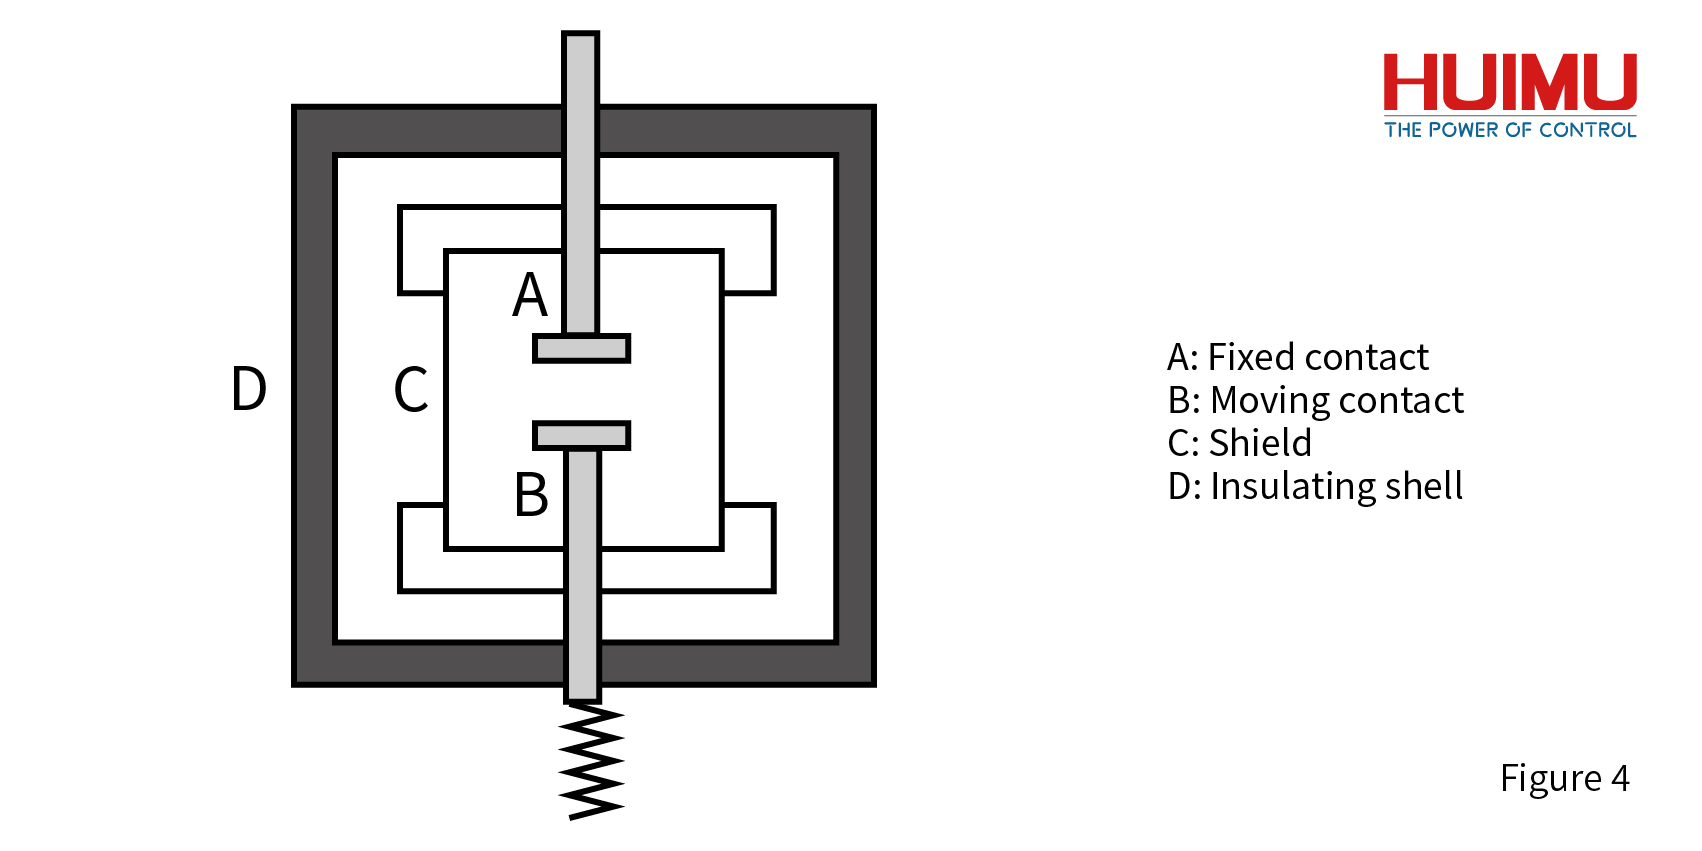 vacuum arc extinguishing chamber, the contacts of vacuum circuit breaker